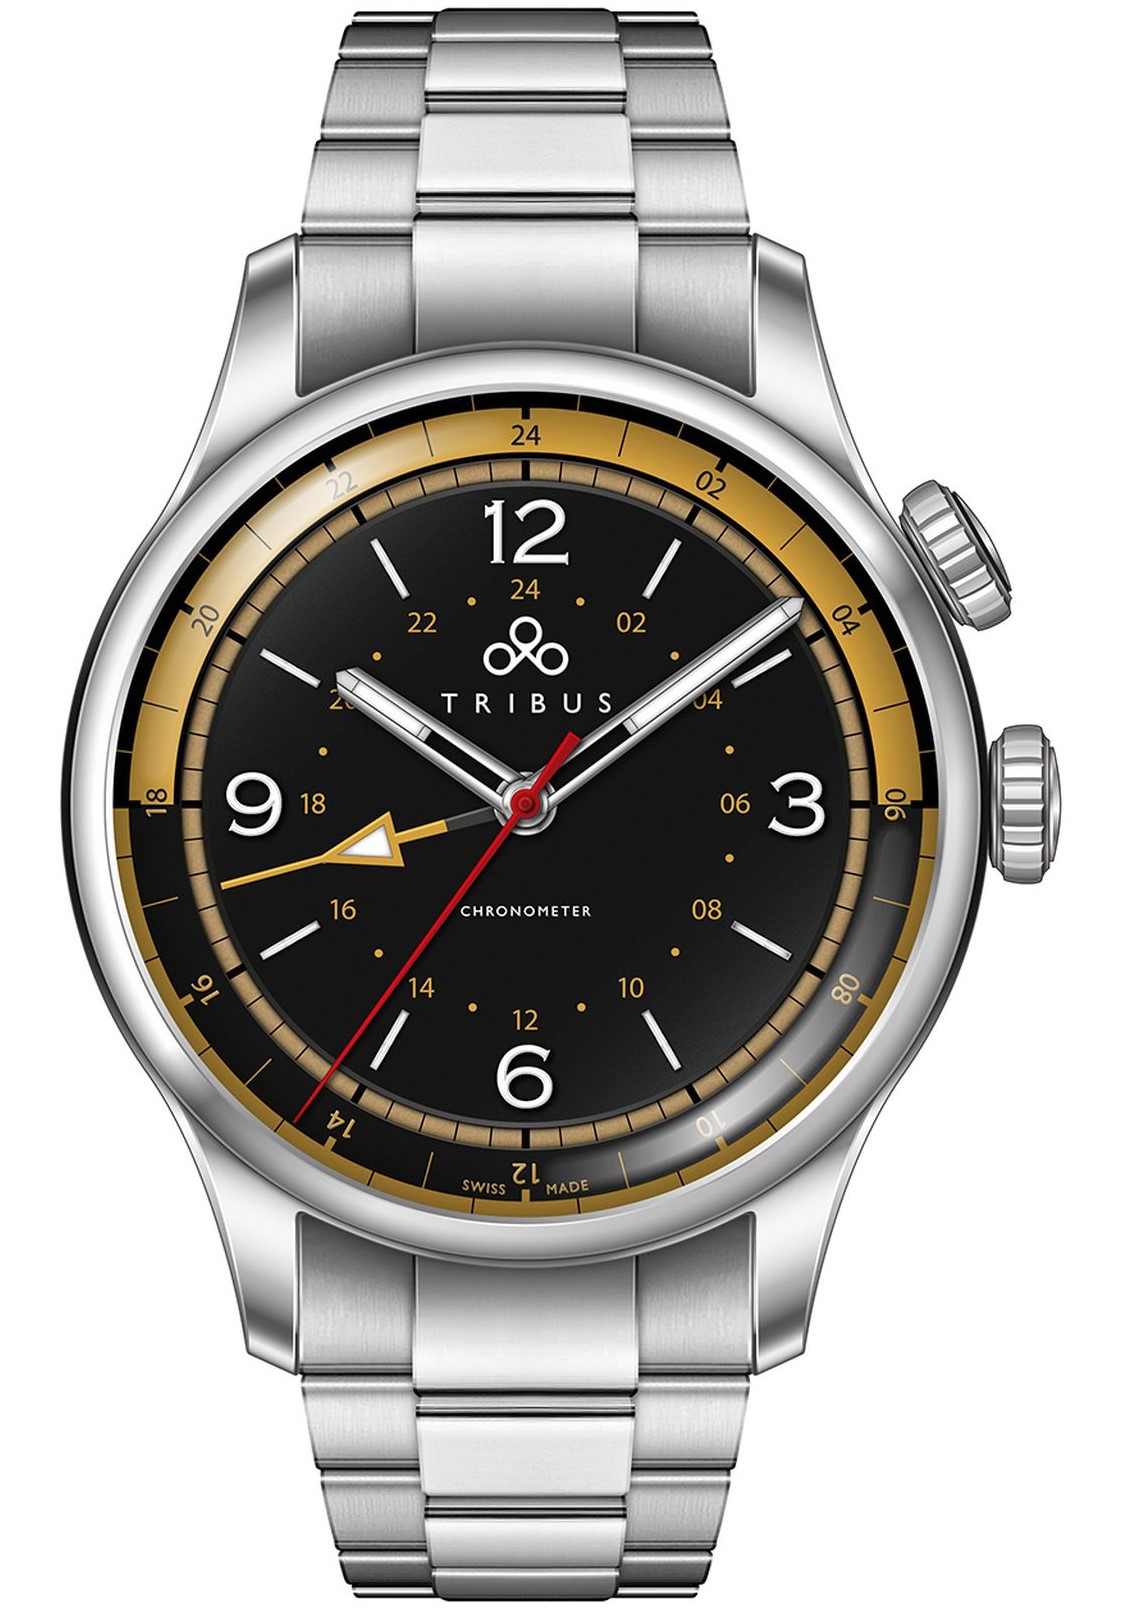 FS Tribus TRI-02 GMT - 3 Timezone GMT - COSC Chronometer - Steel Bracelet -  Full Kit - PRICE REDUCTION